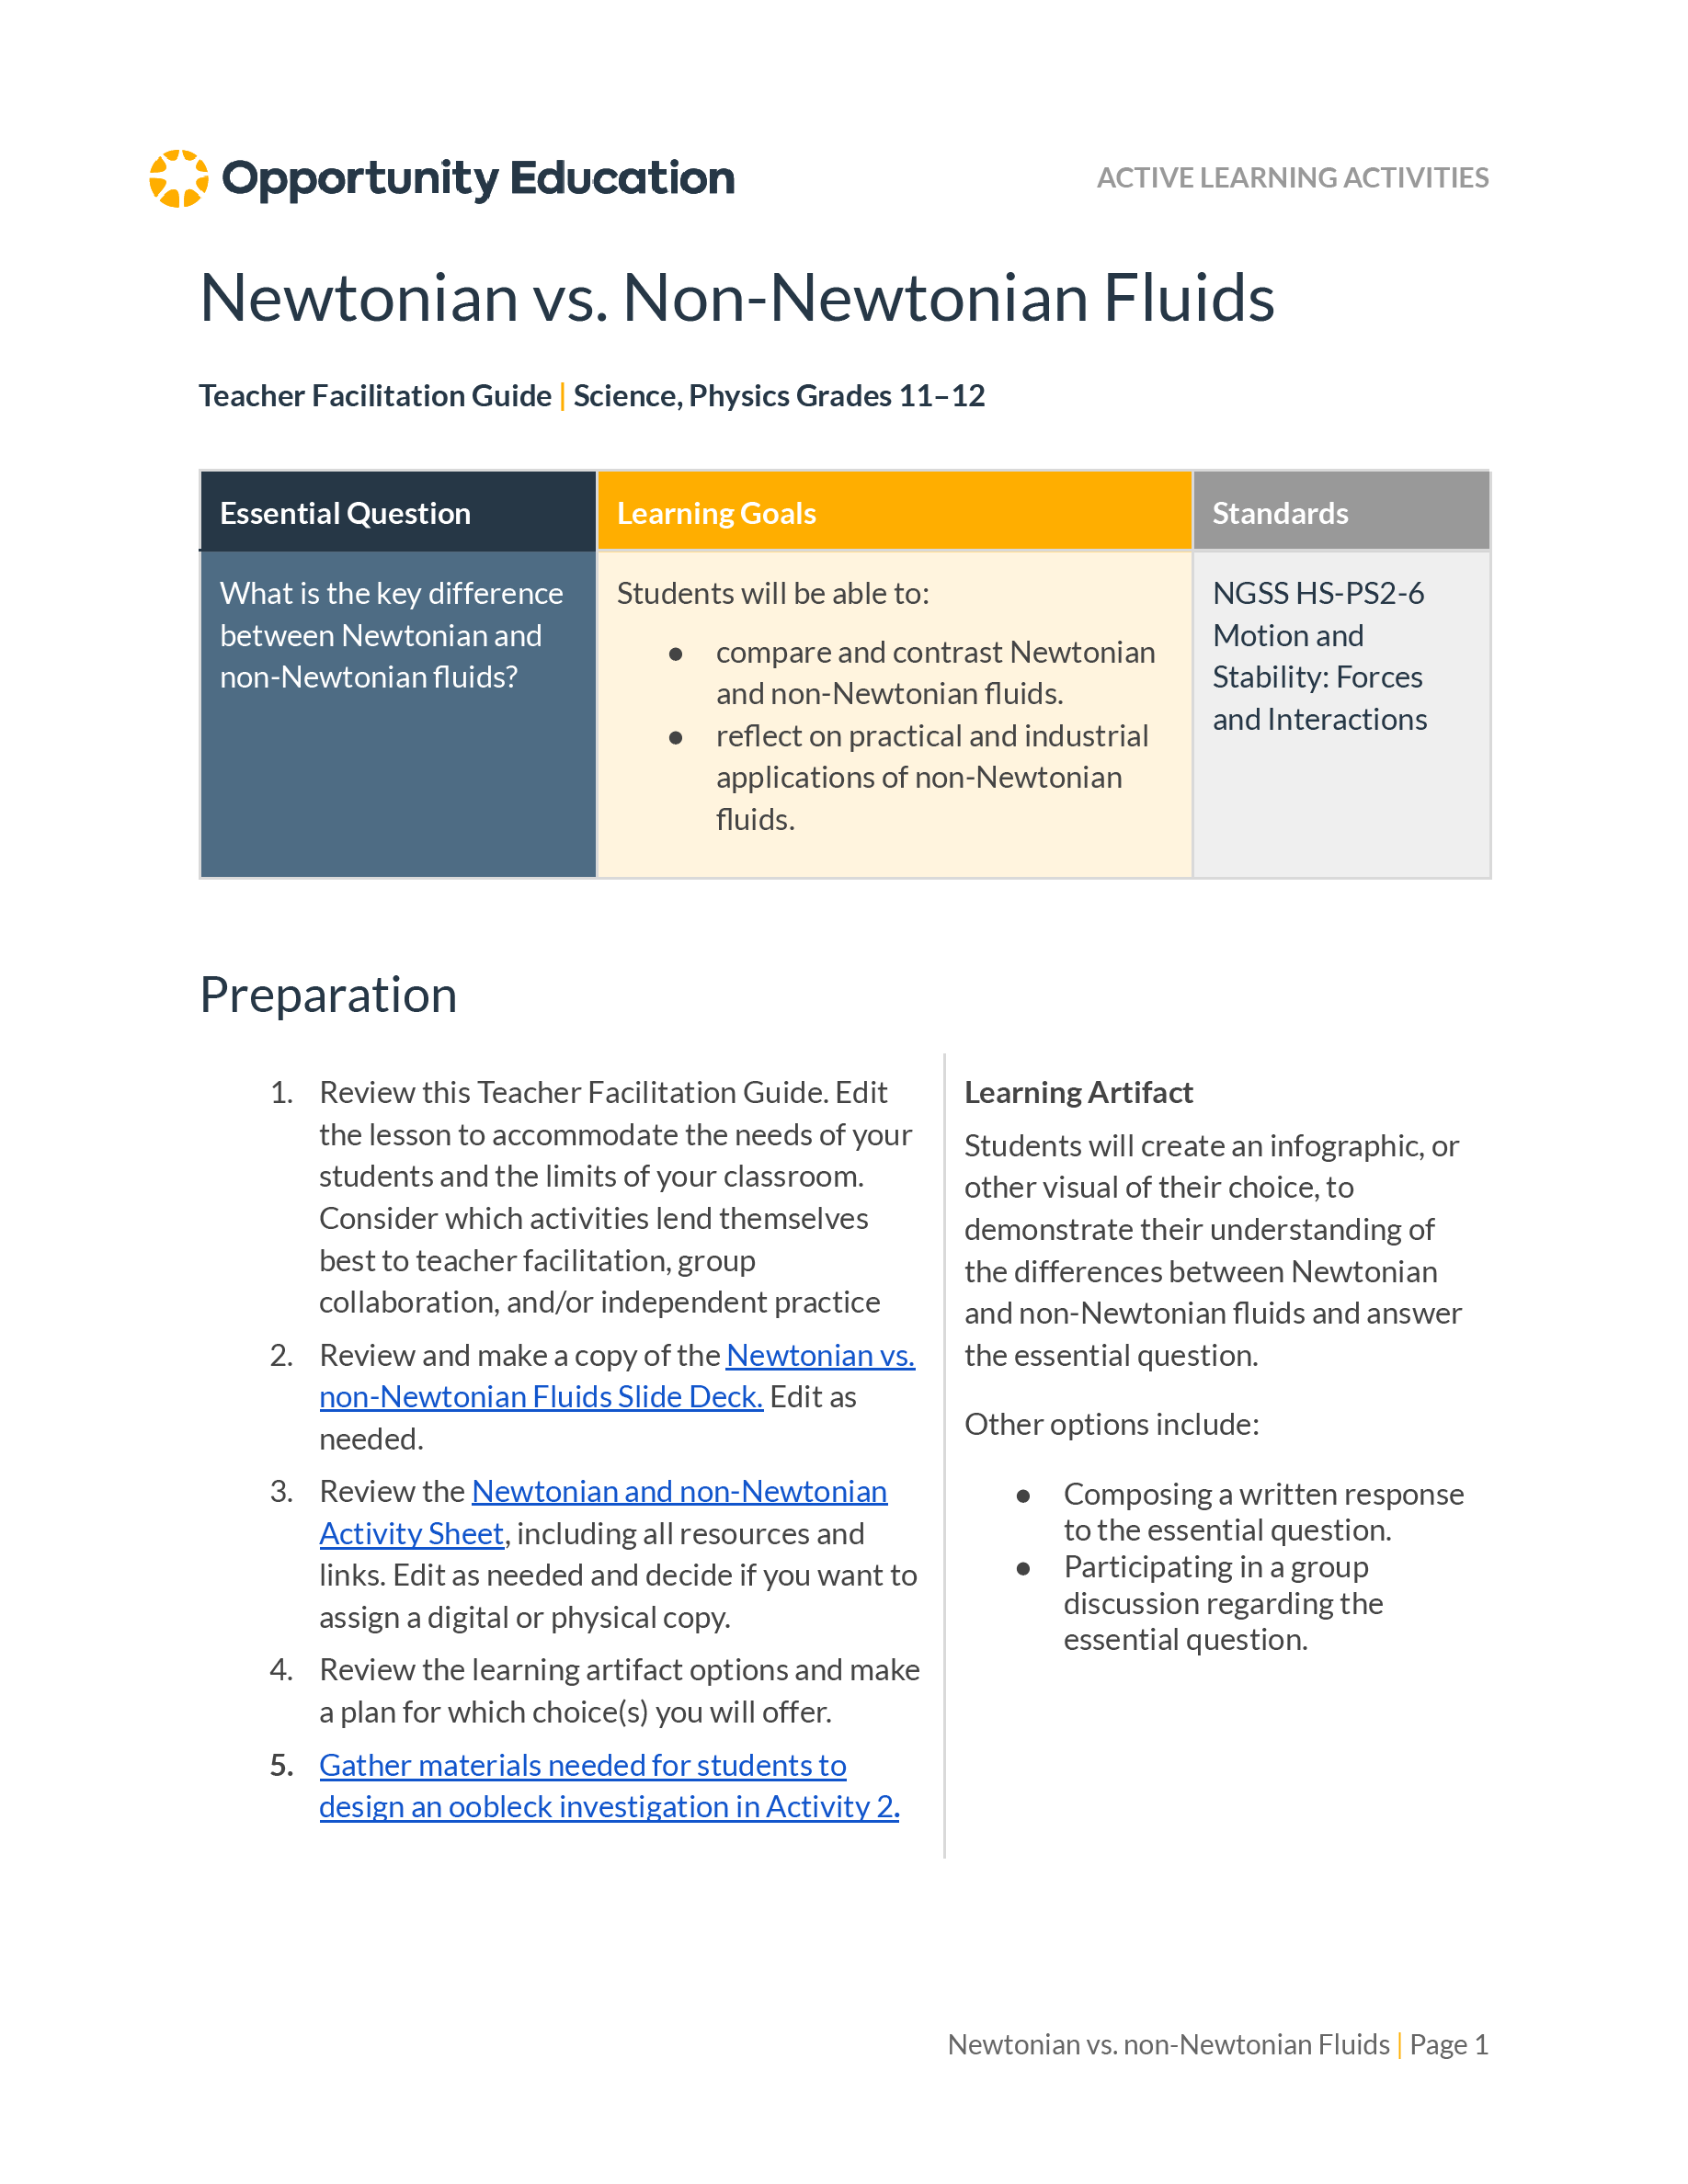 Newtonian vs. Non-Newtonian Fluid